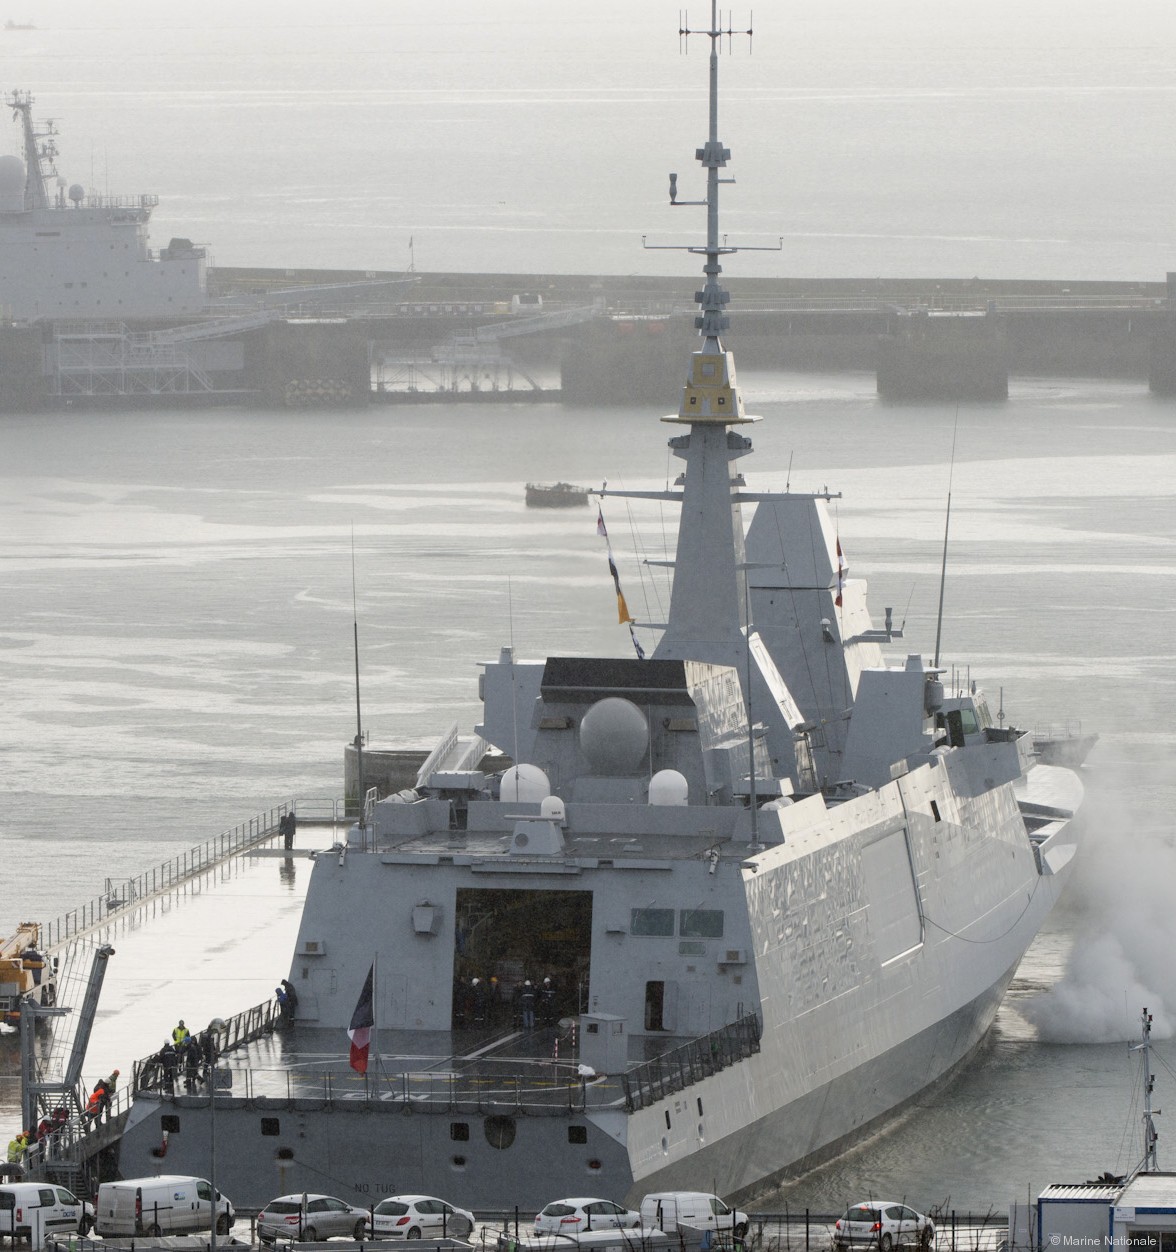 d-650 fs aquitaine fremm class frigate fregate multi purpose french navy marine nationale 21